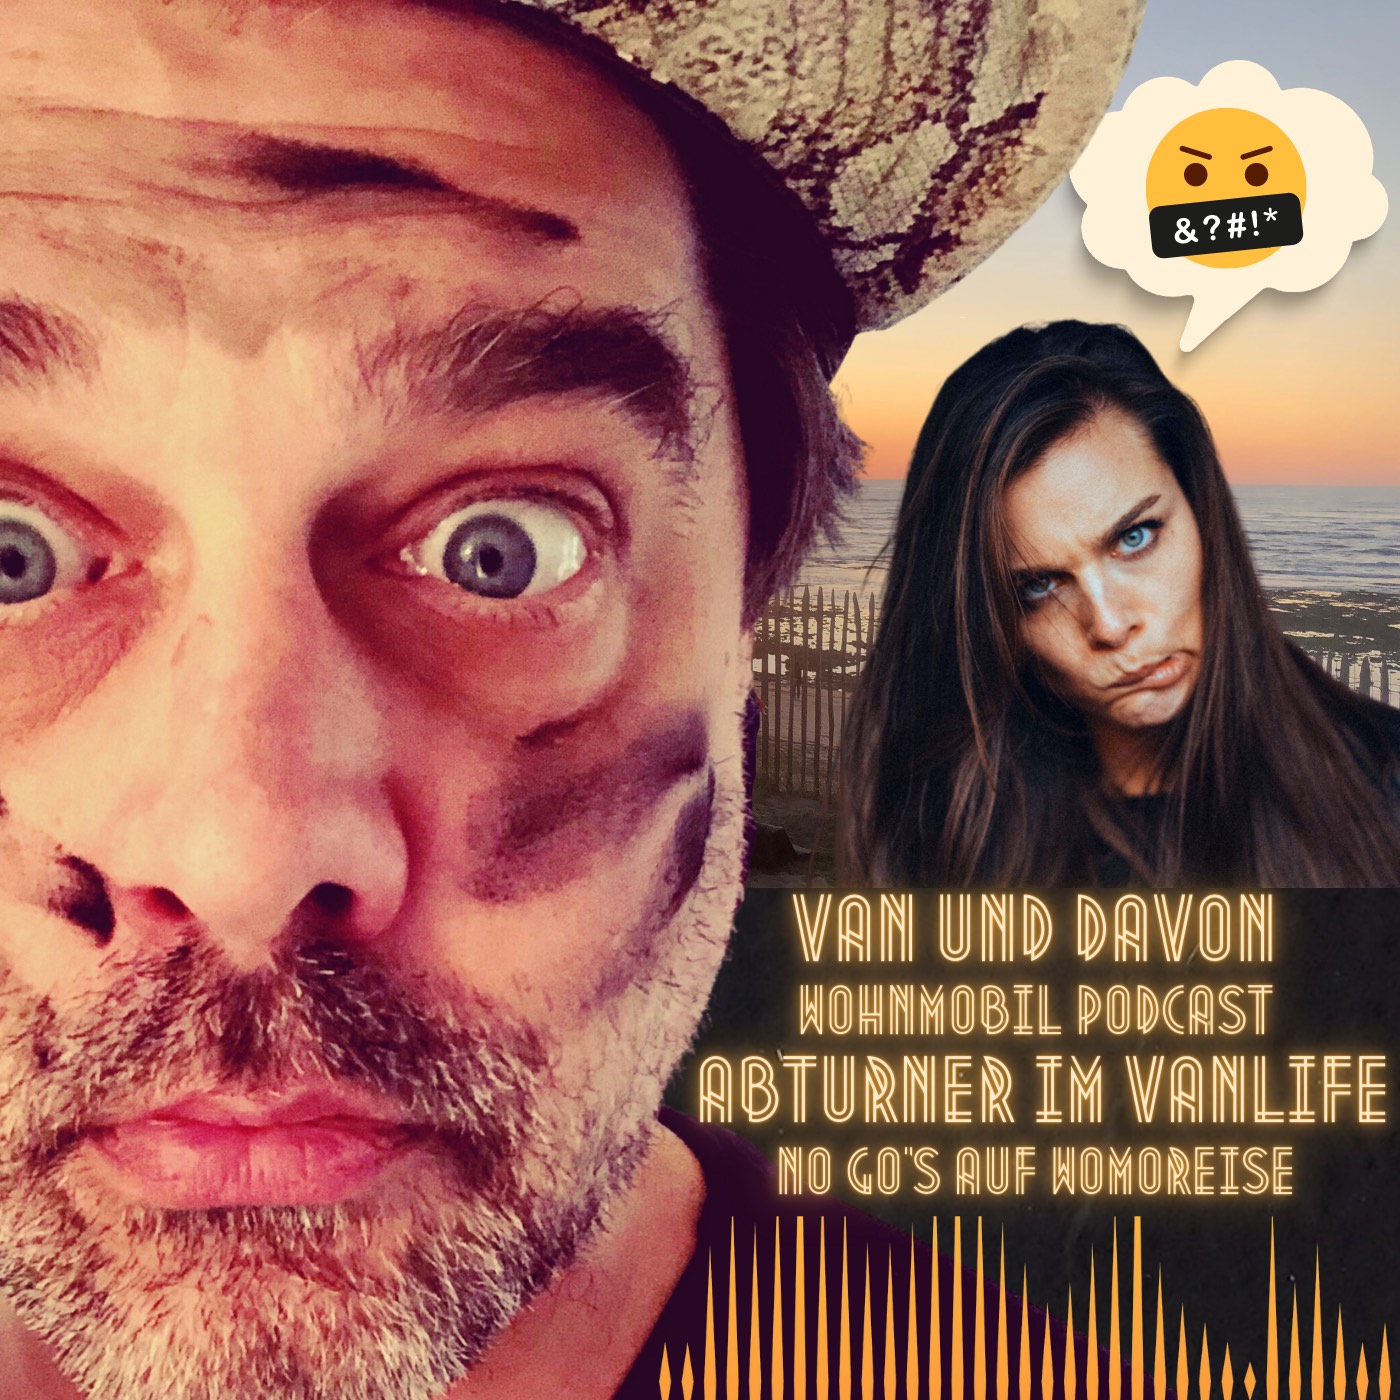 Van und davon Podcast Cover Folge Abturner im Vanlife